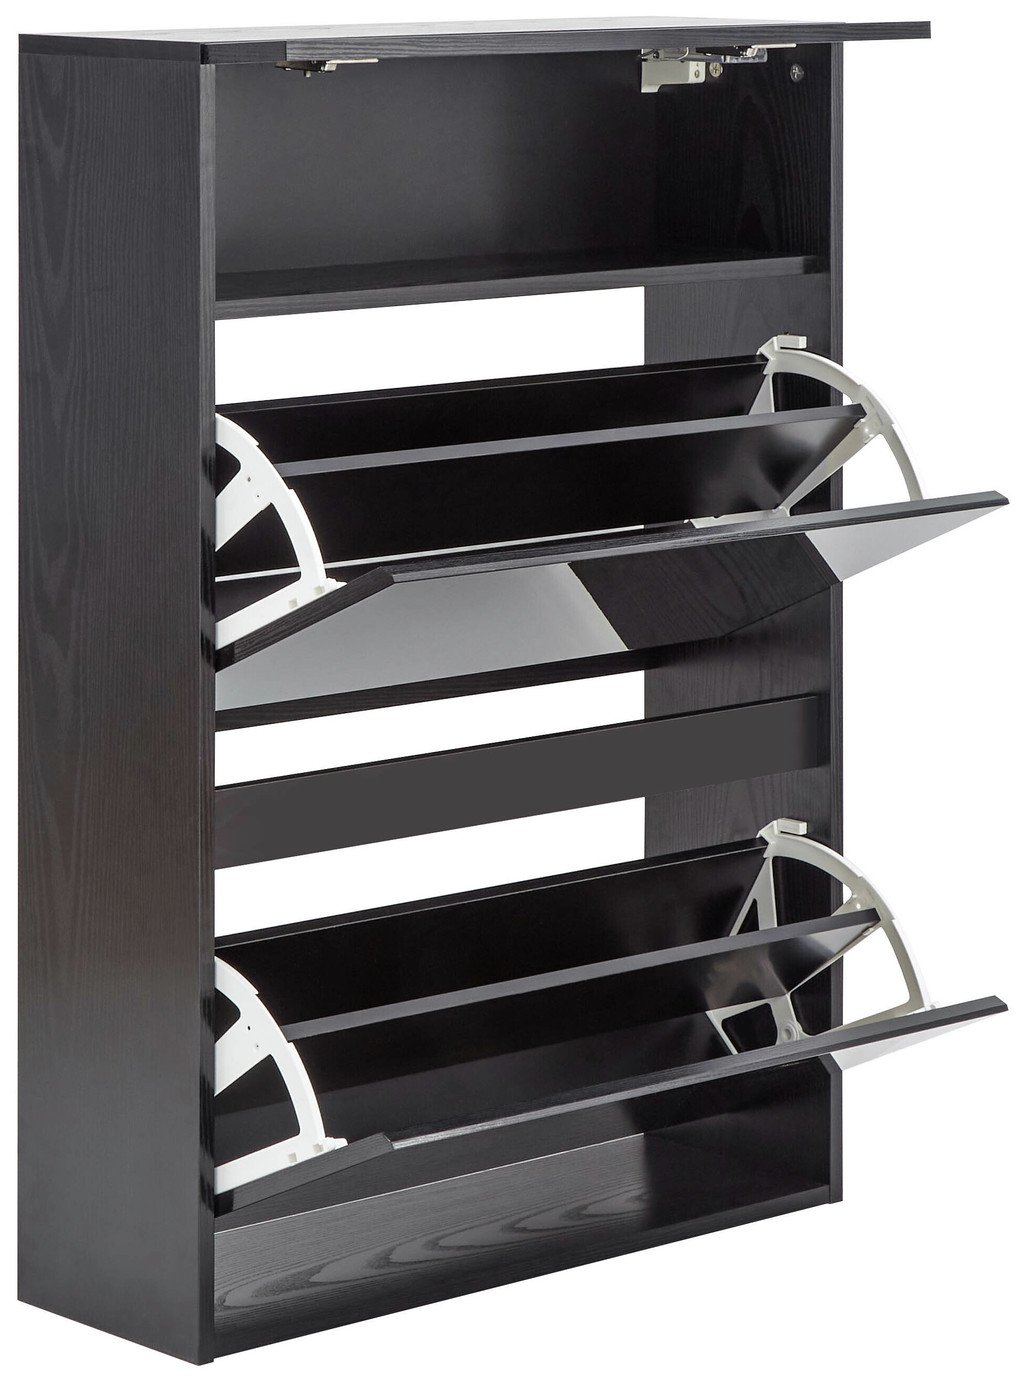 GFW Galicia 2 Shelf With LED Light Shoe Storage - Black